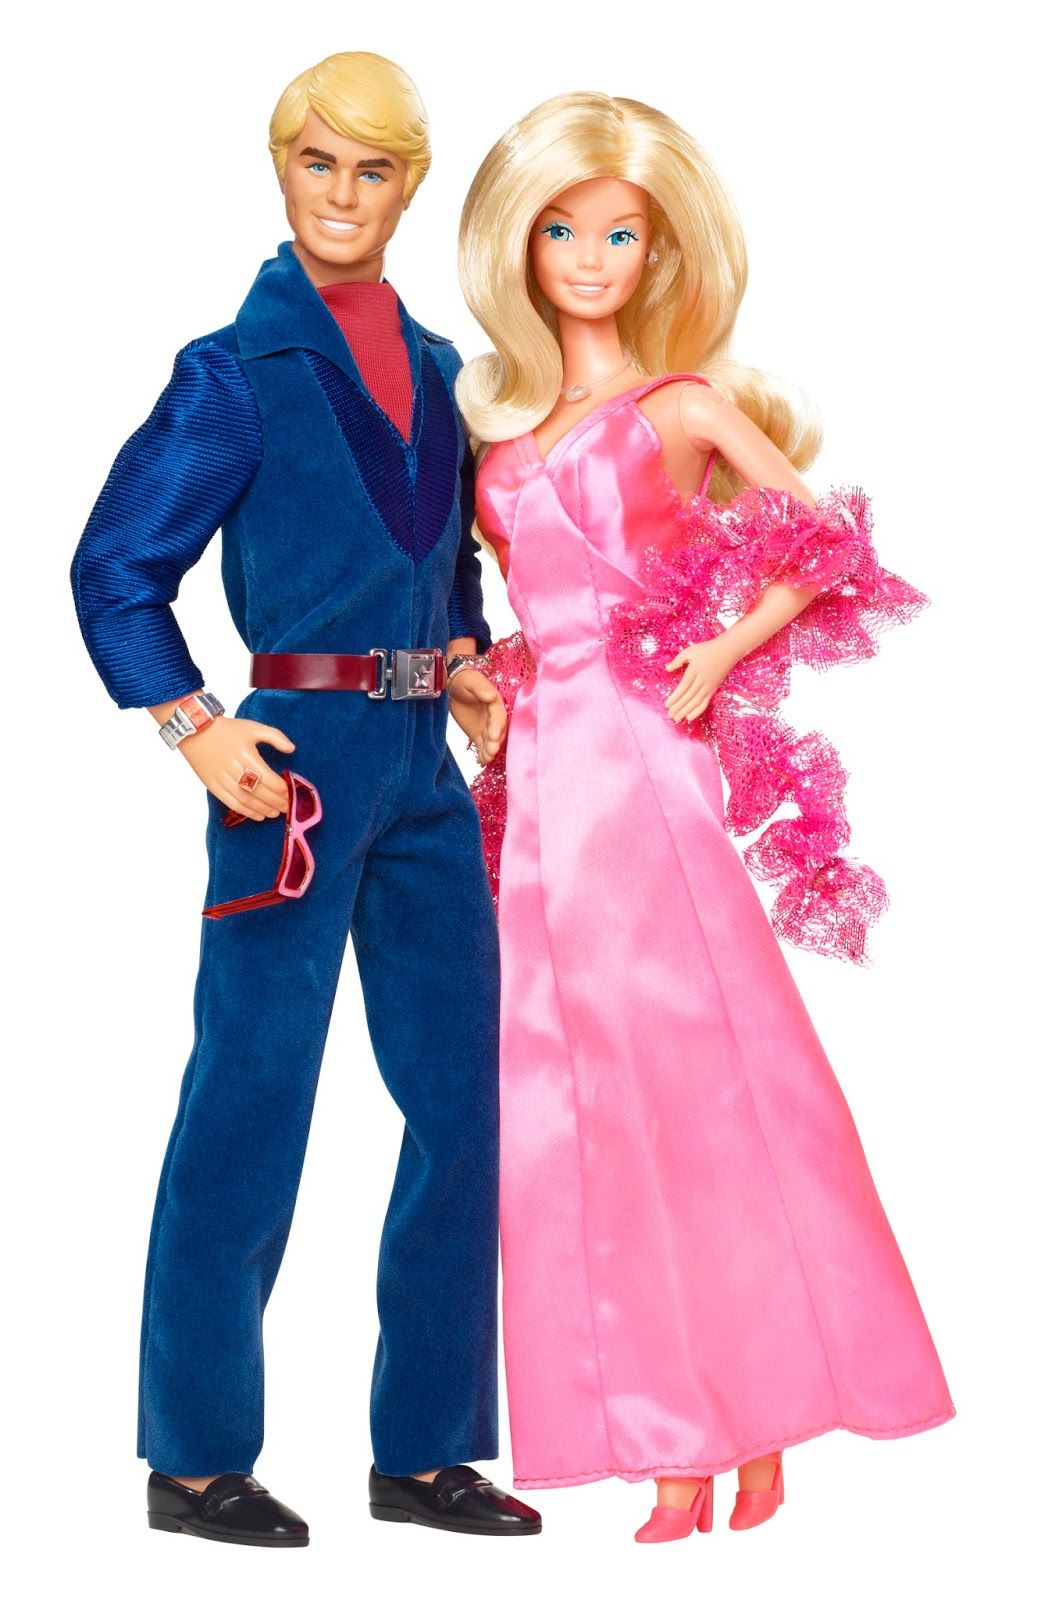 Barbie and Ken Wallpaper Free Barbie and Ken Background